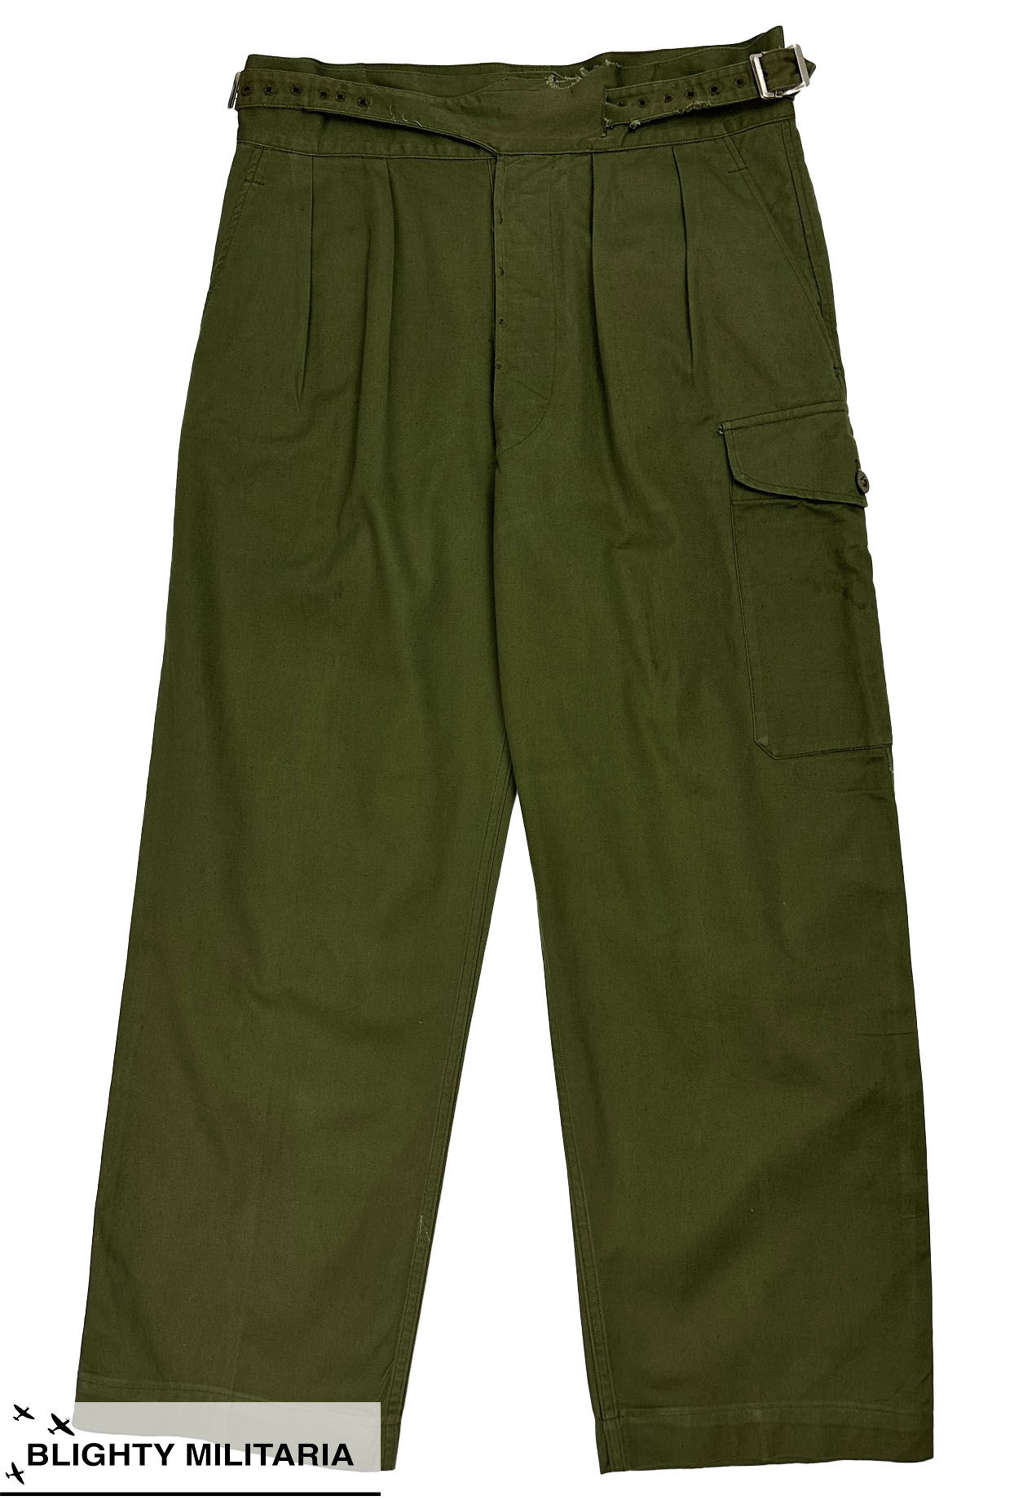 Original 1970s British 1950 Pattern Jungle Green Trousers - Size 8